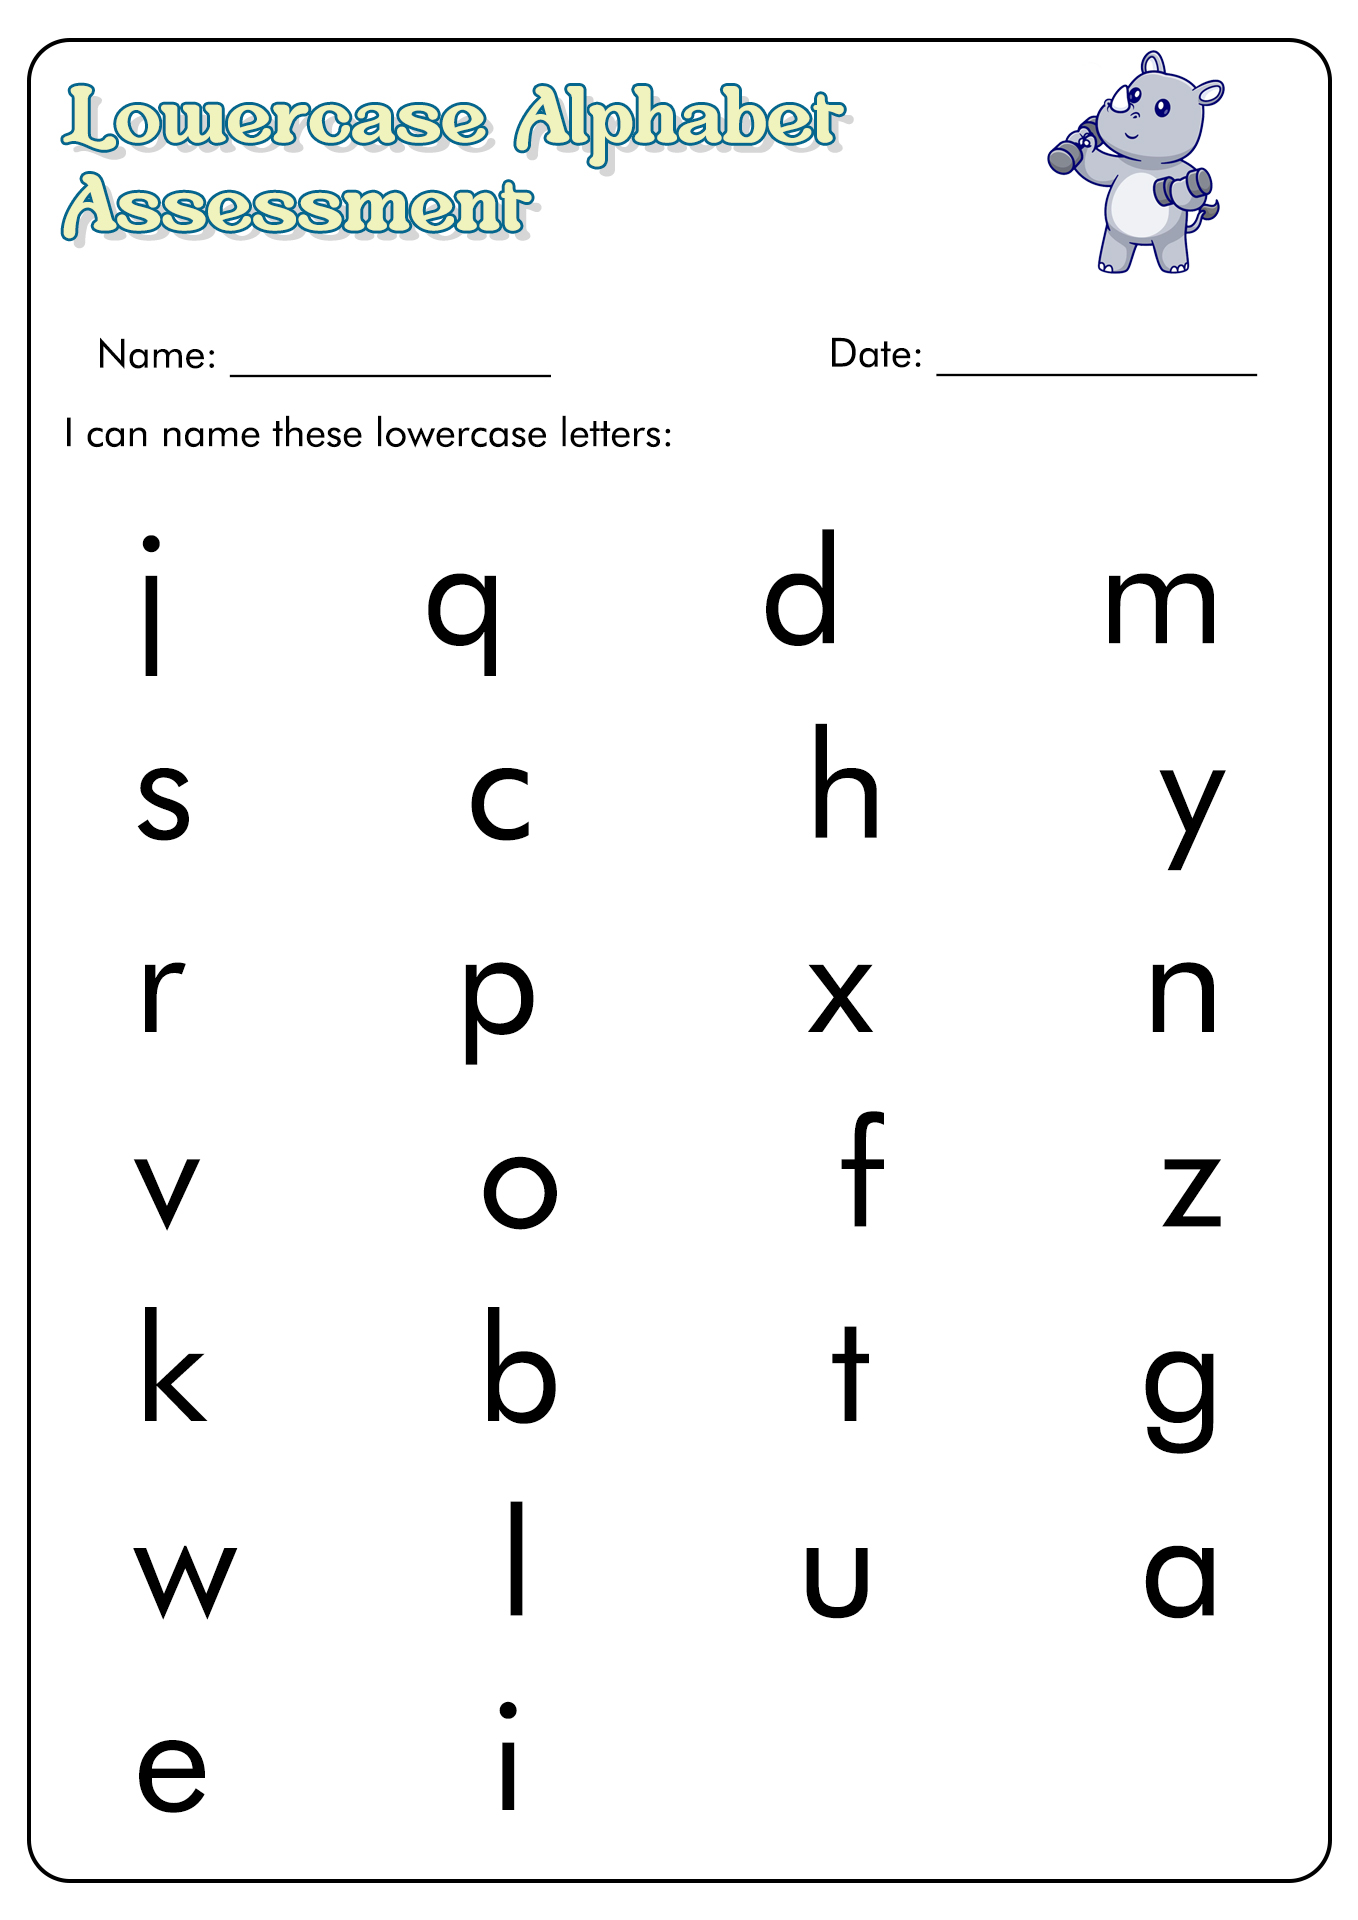 Lowercase Alphabet Letter Recognition Assessment Image